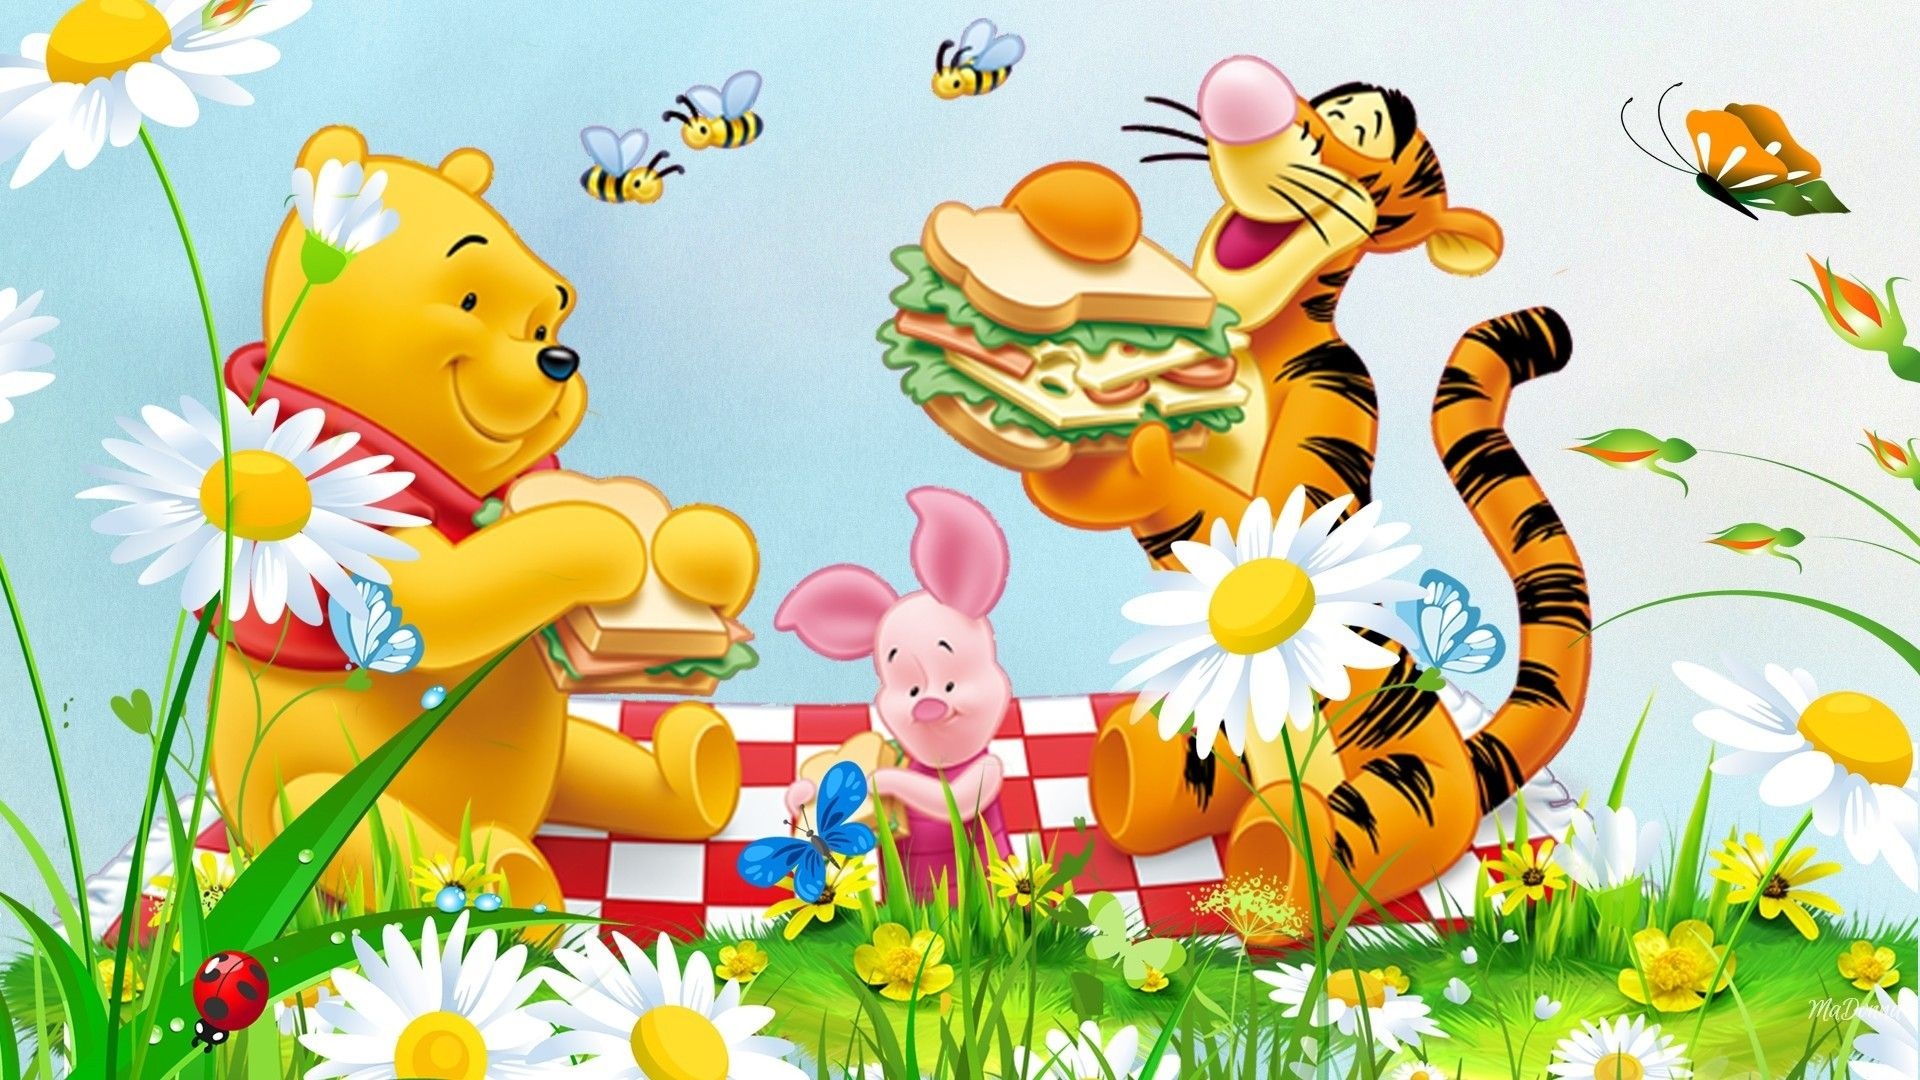 Tigger, Winnie-the-Pooh animation, Picnic flowers grass bee, Winnie the Pooh Tigger, 1920x1080 Full HD Desktop